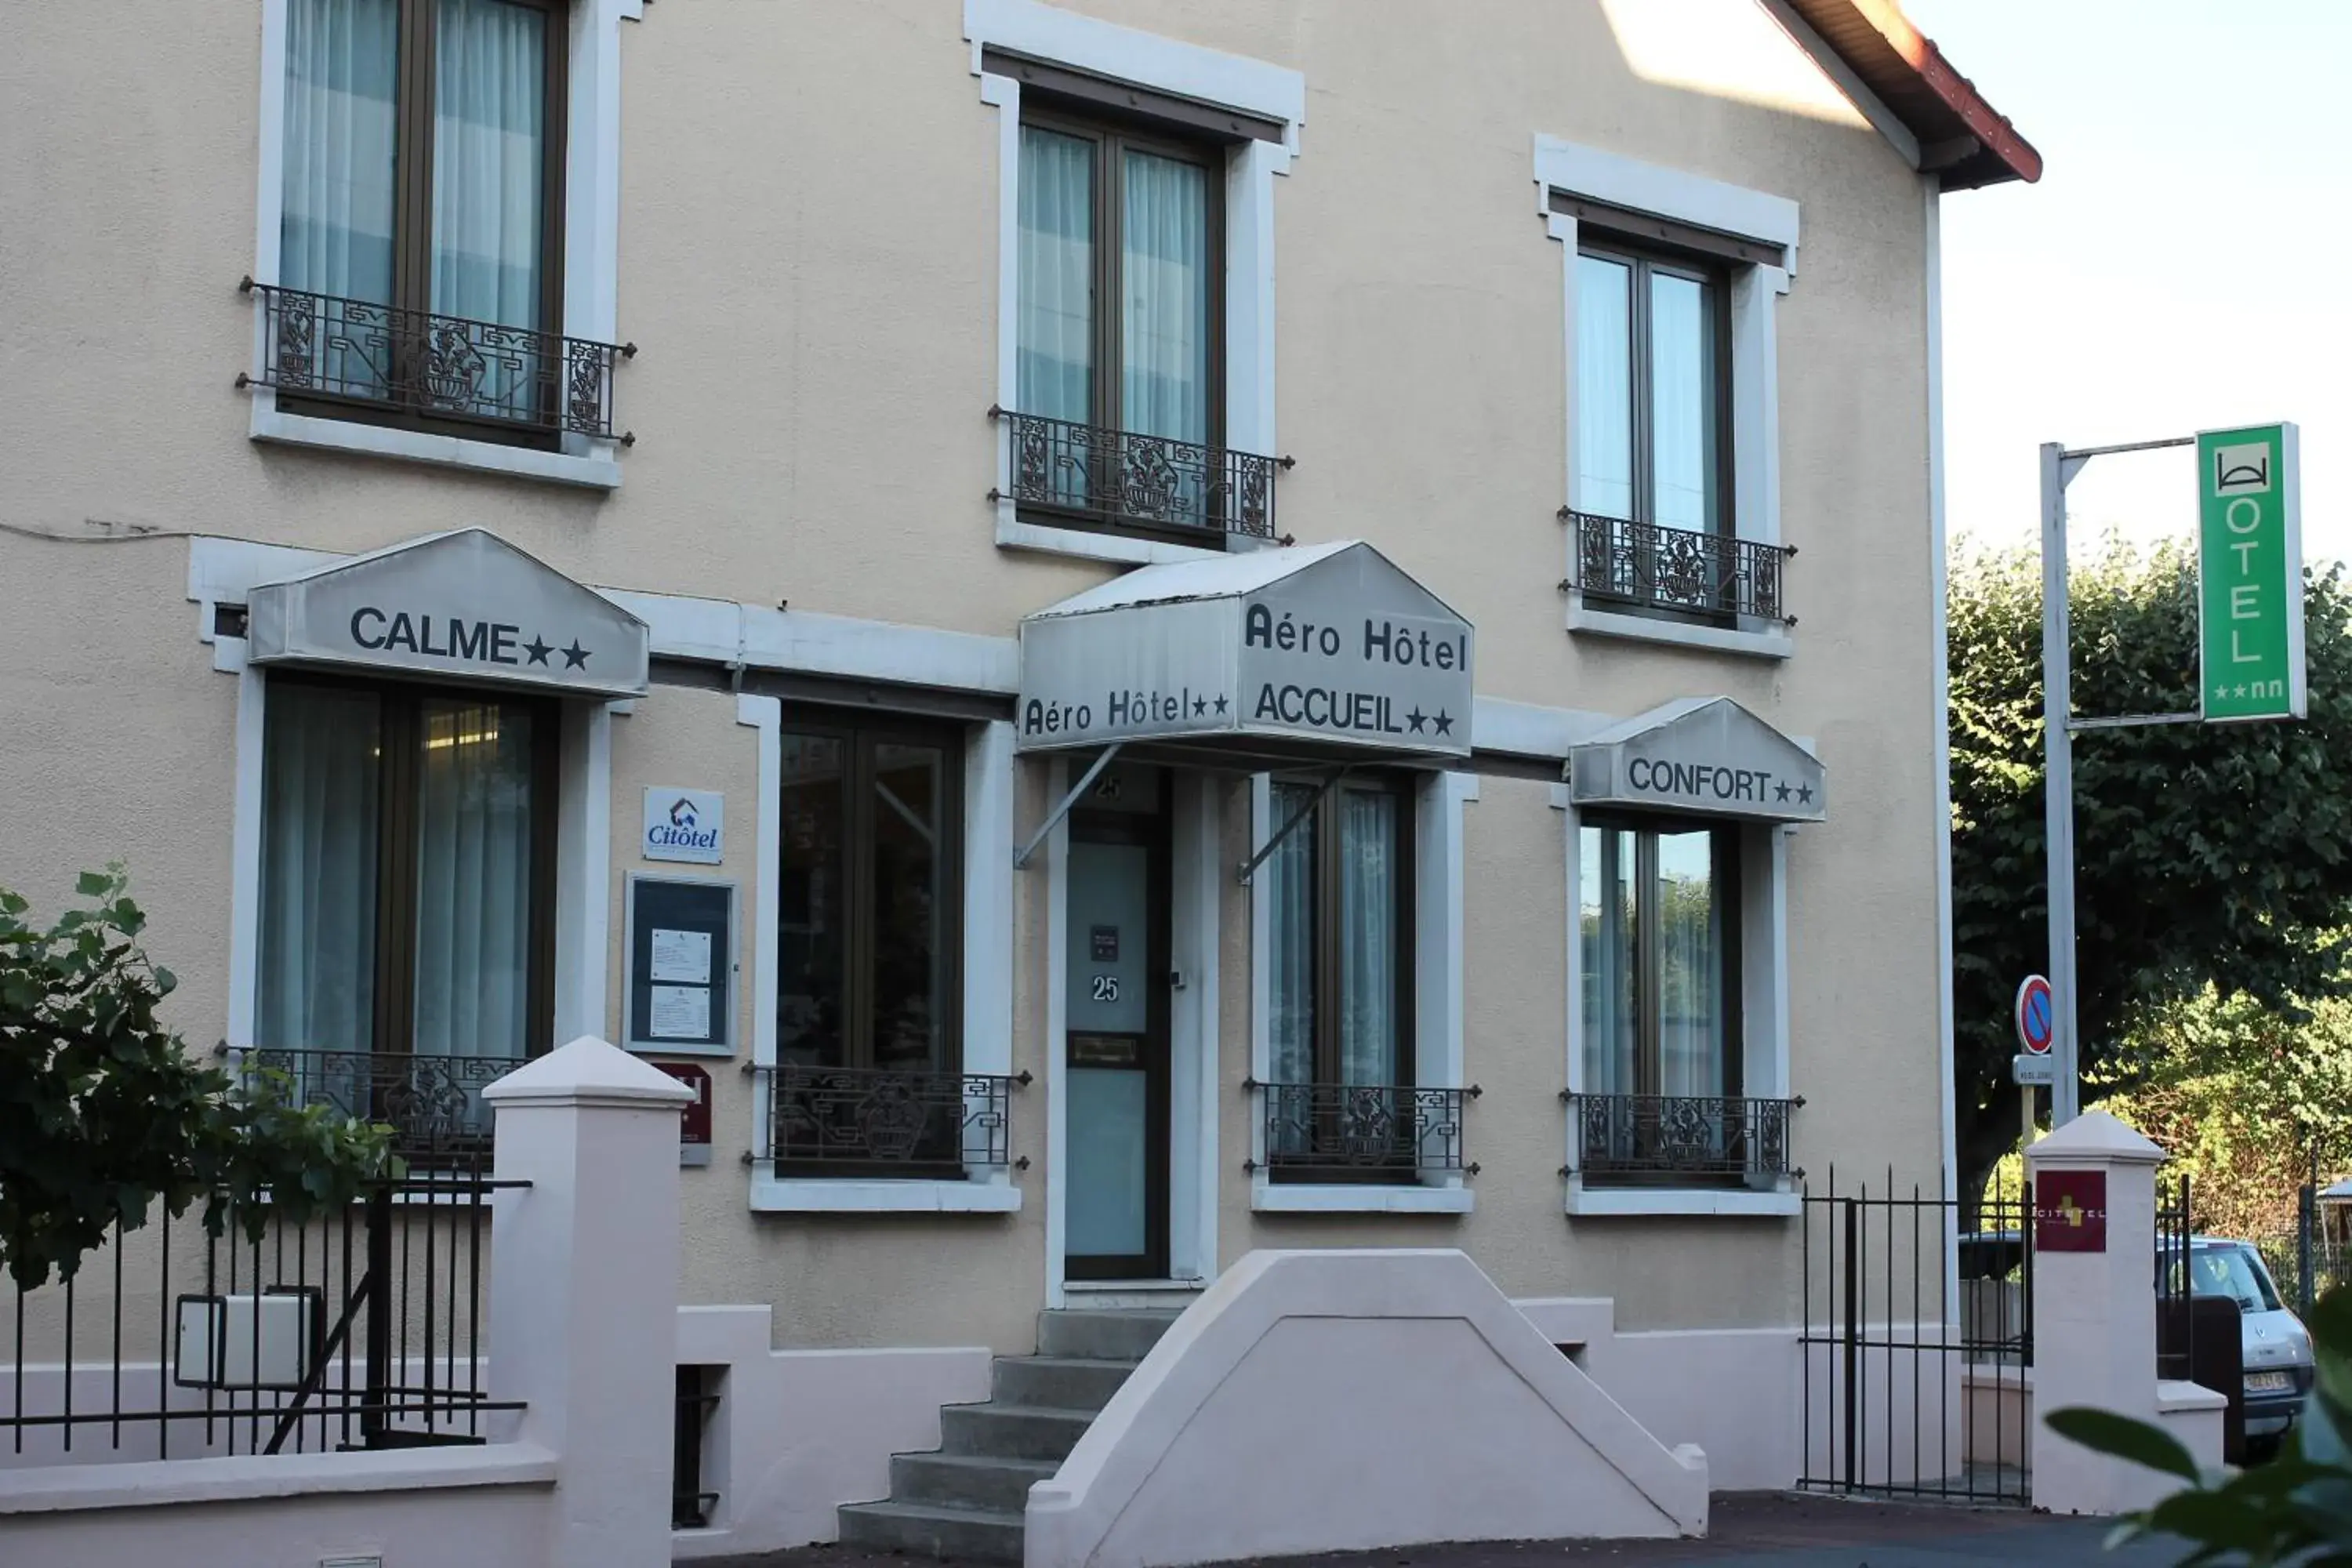 Facade/Entrance in Cit'Hotel Aéro-Hotel